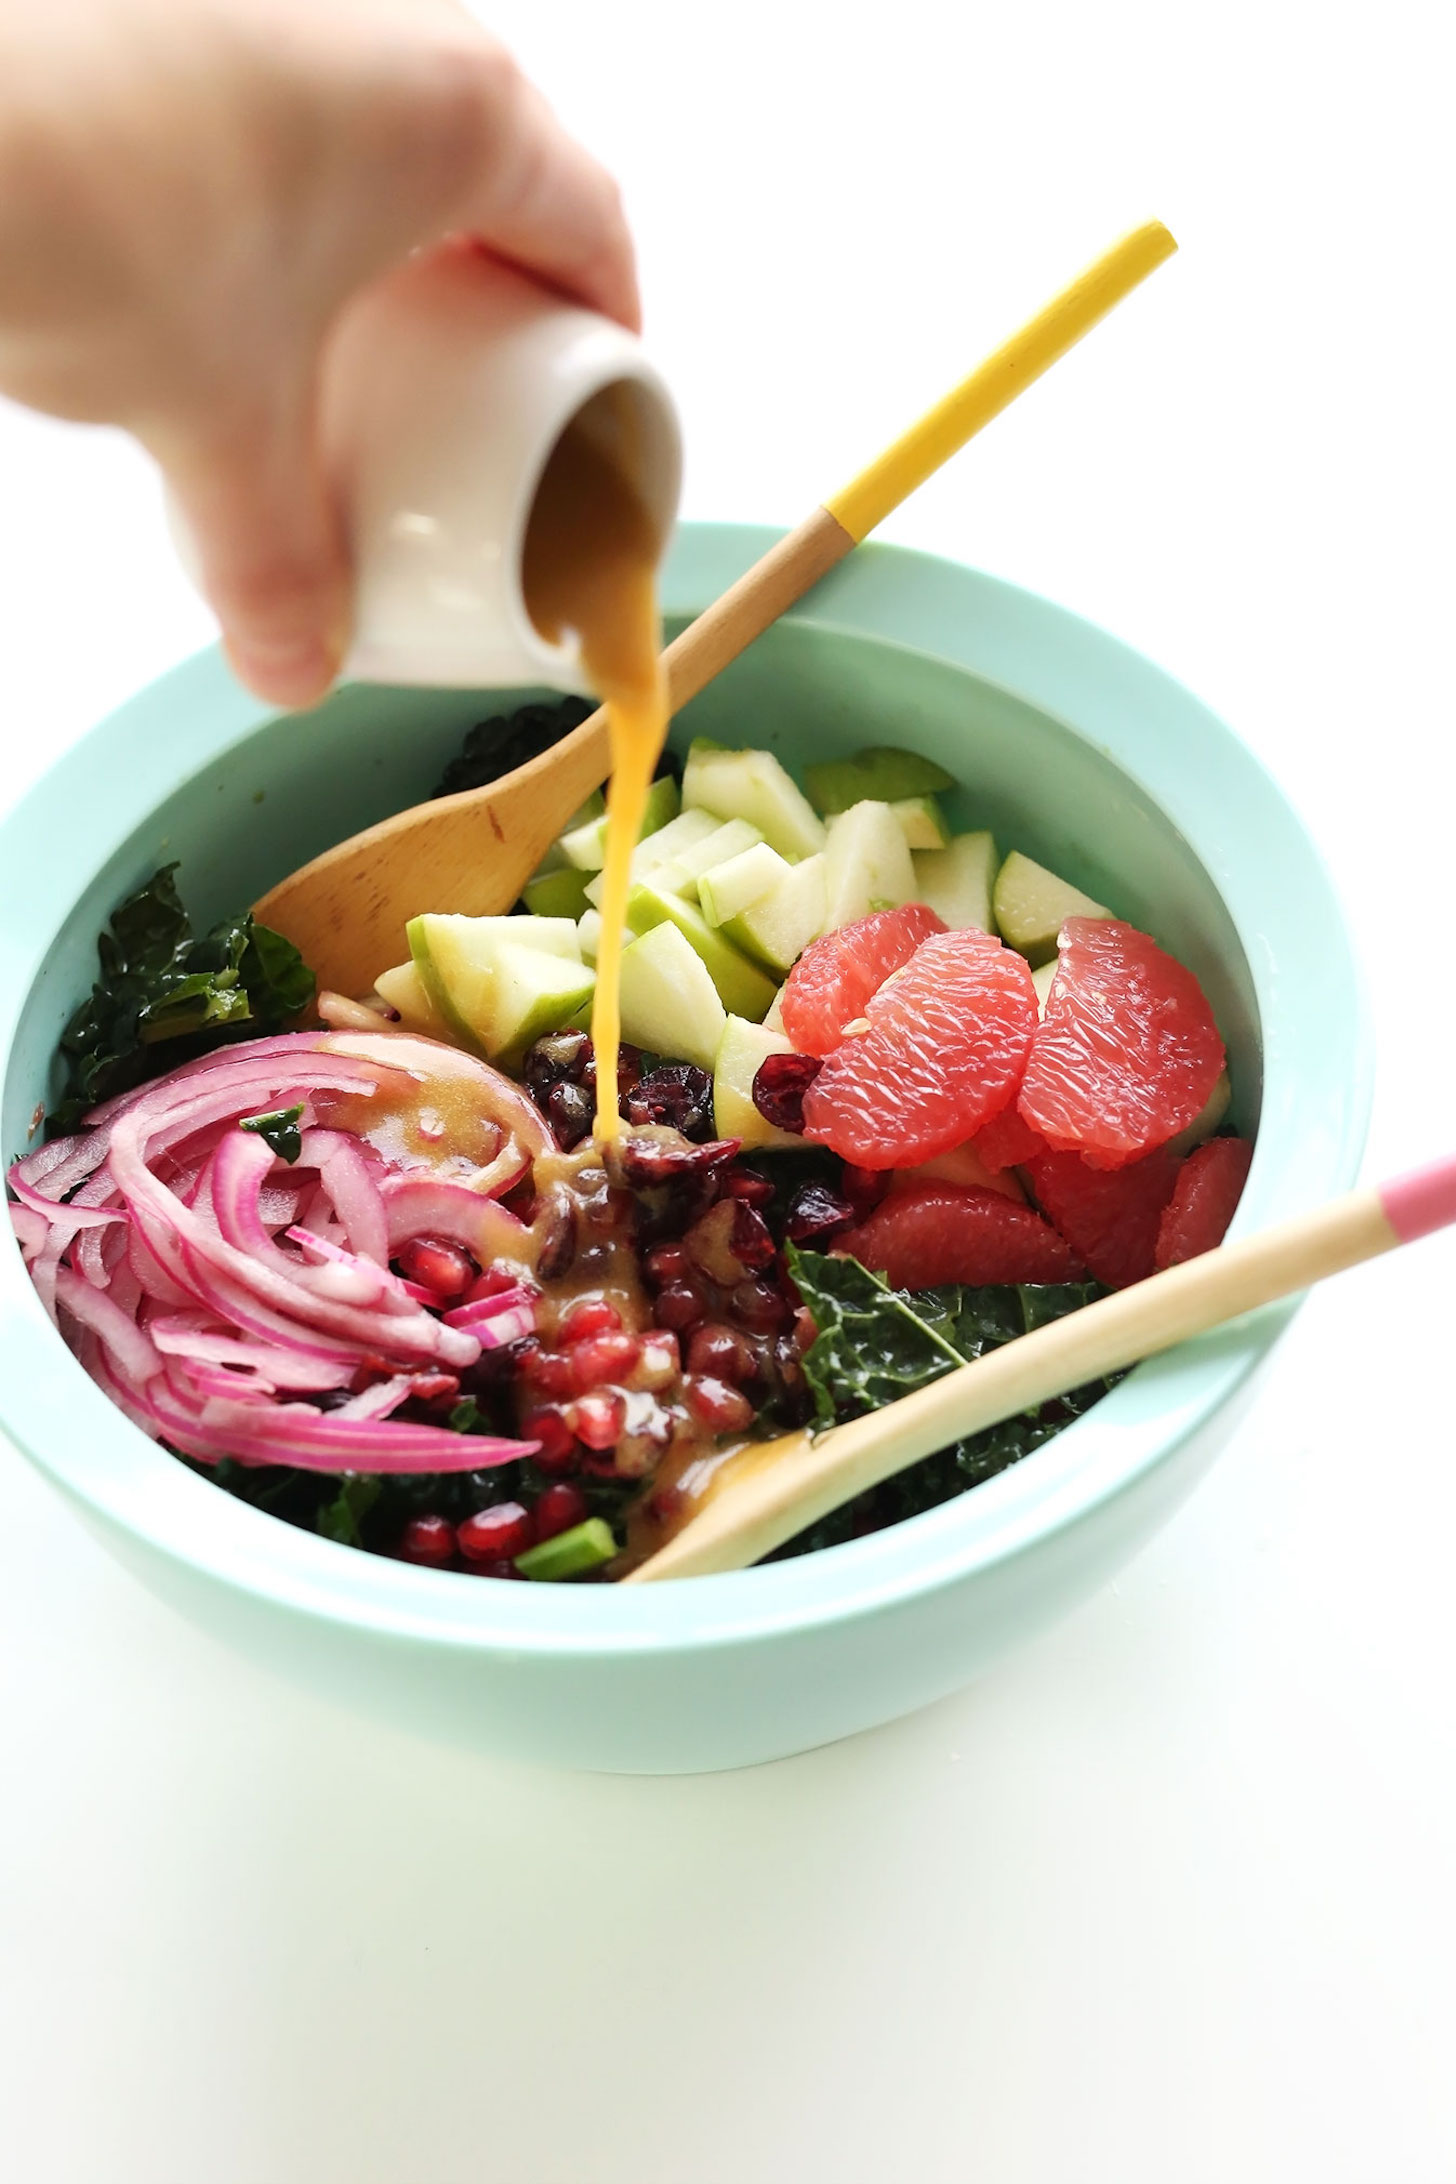 https://minimalistbaker.com/wp-content/uploads/2015/01/AMAZING-Citrus-Kale-Salad-Just-30-minutes-and-a-simple-red-wine-vinaigrette-vegan-glutenfree-detox-healthy-1.jpg